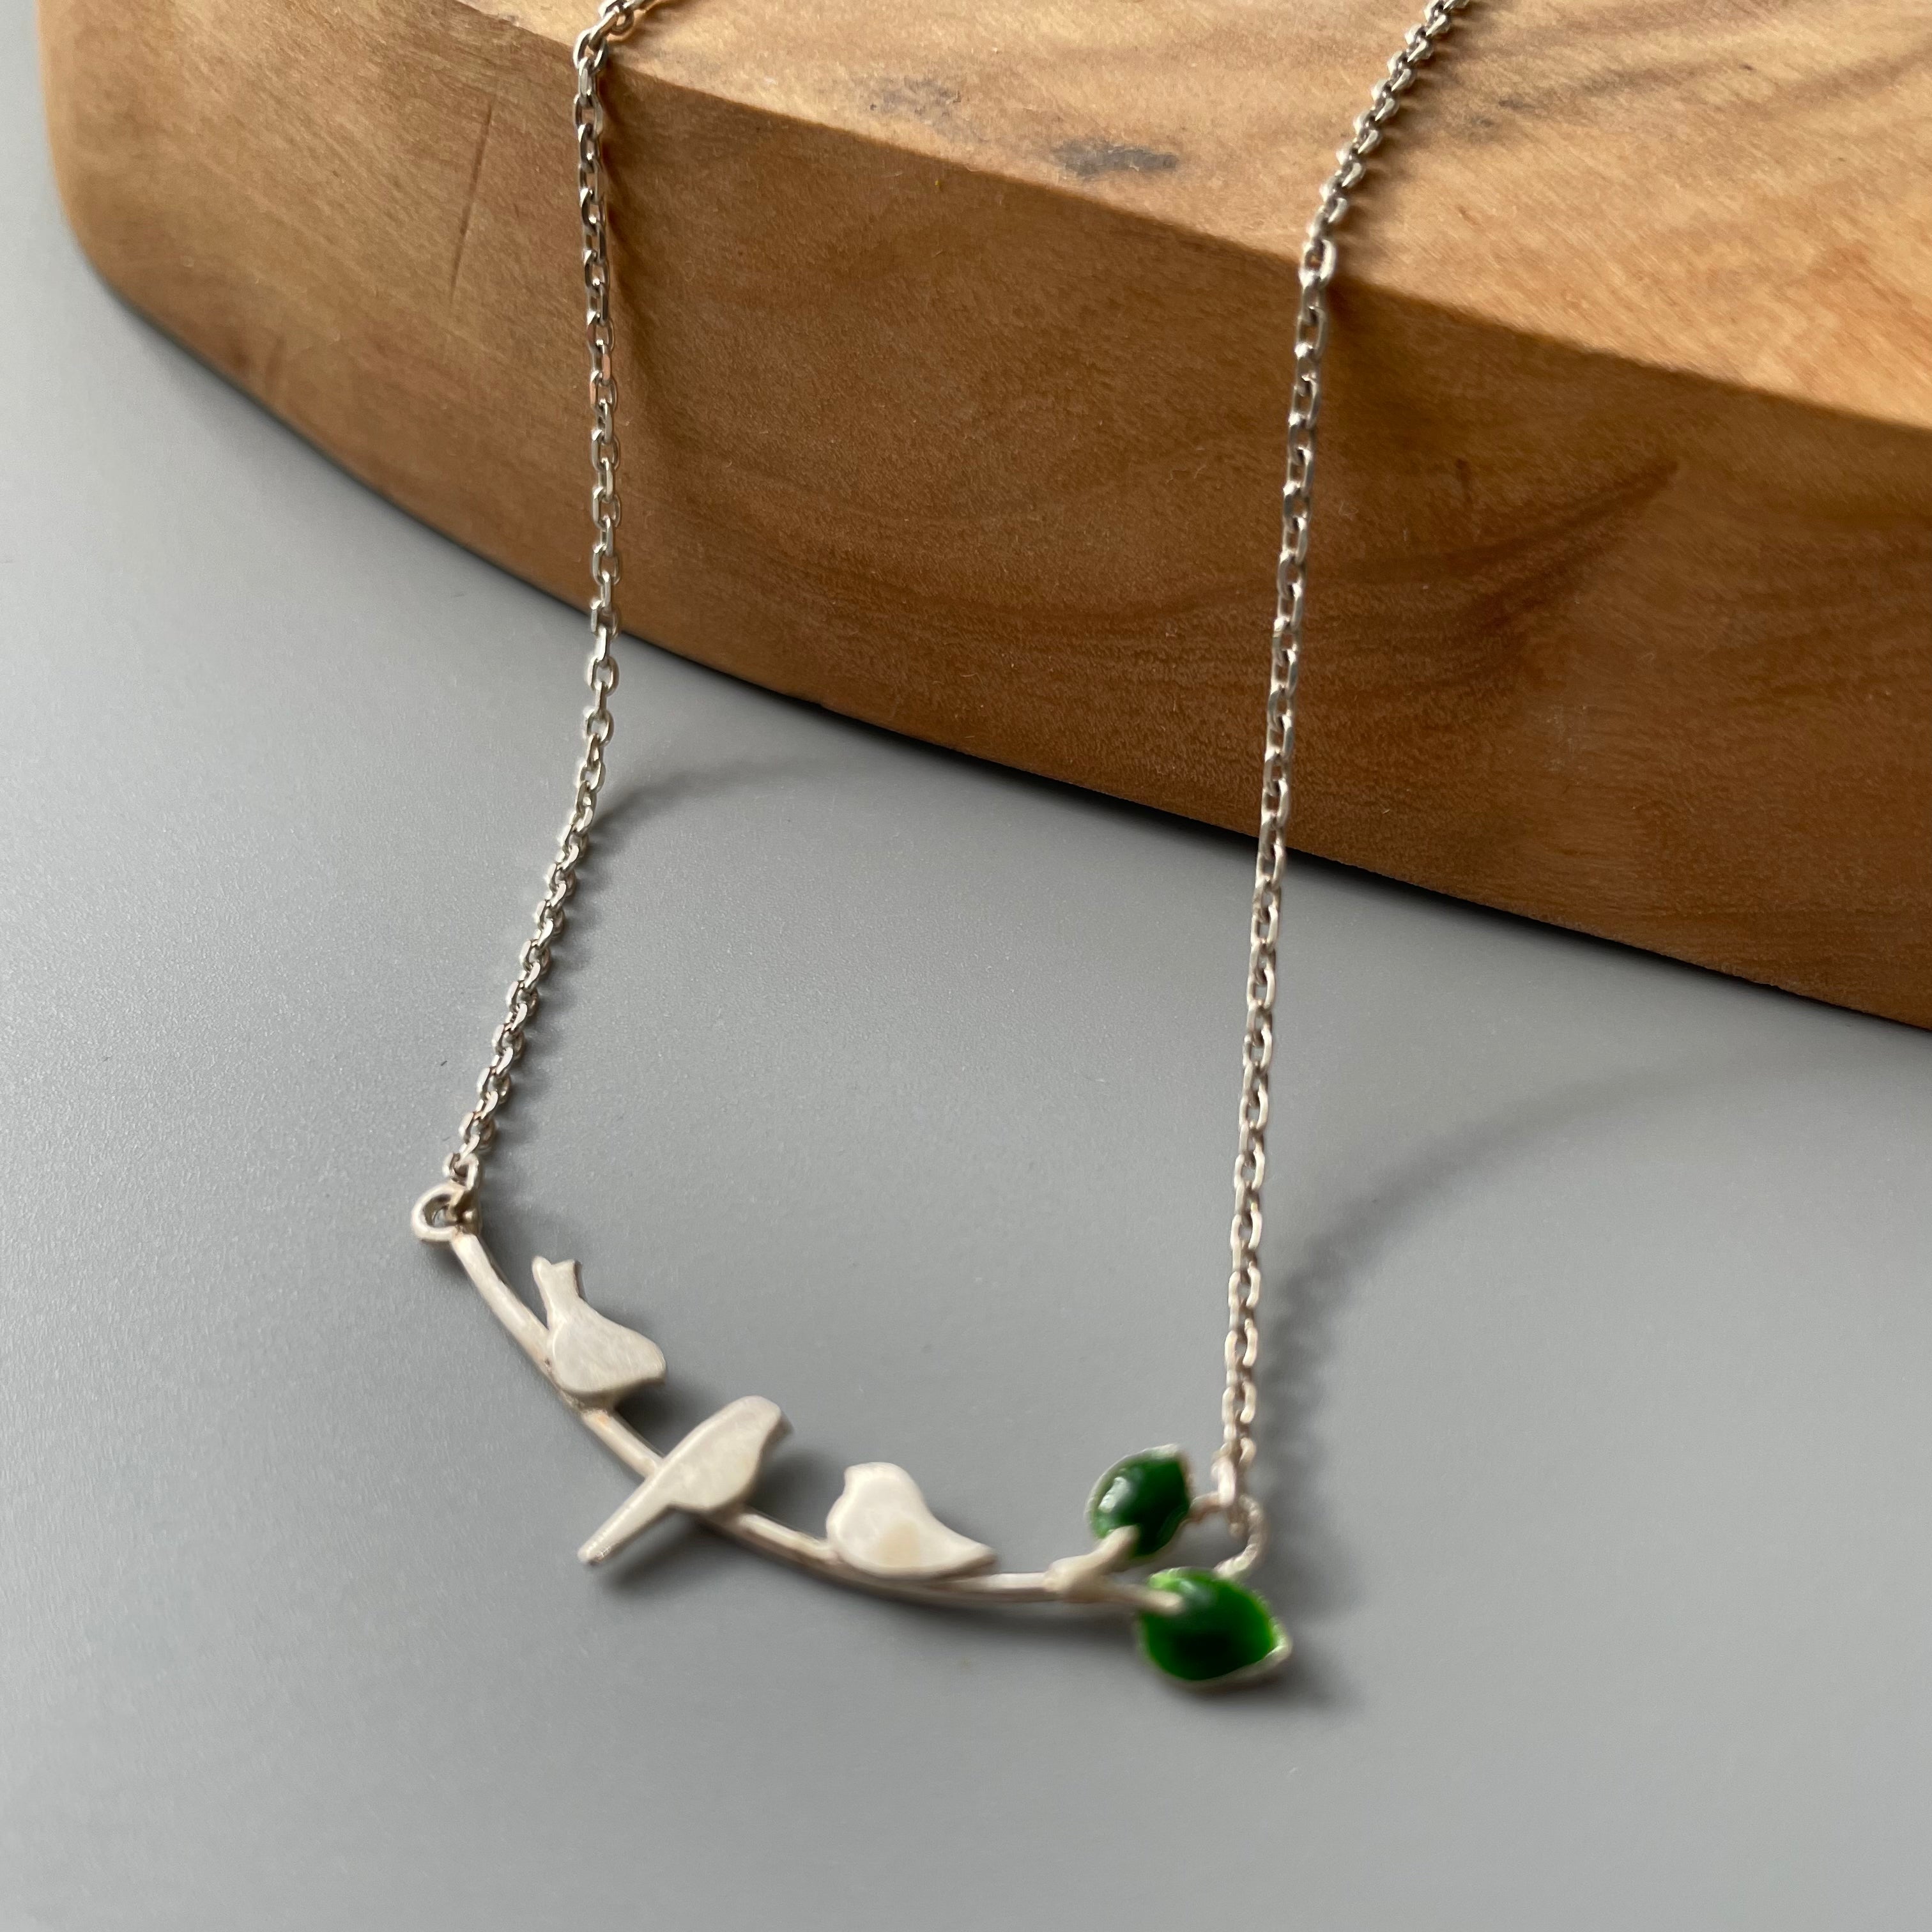 Handmade Persian Necklace with Birds Symbol